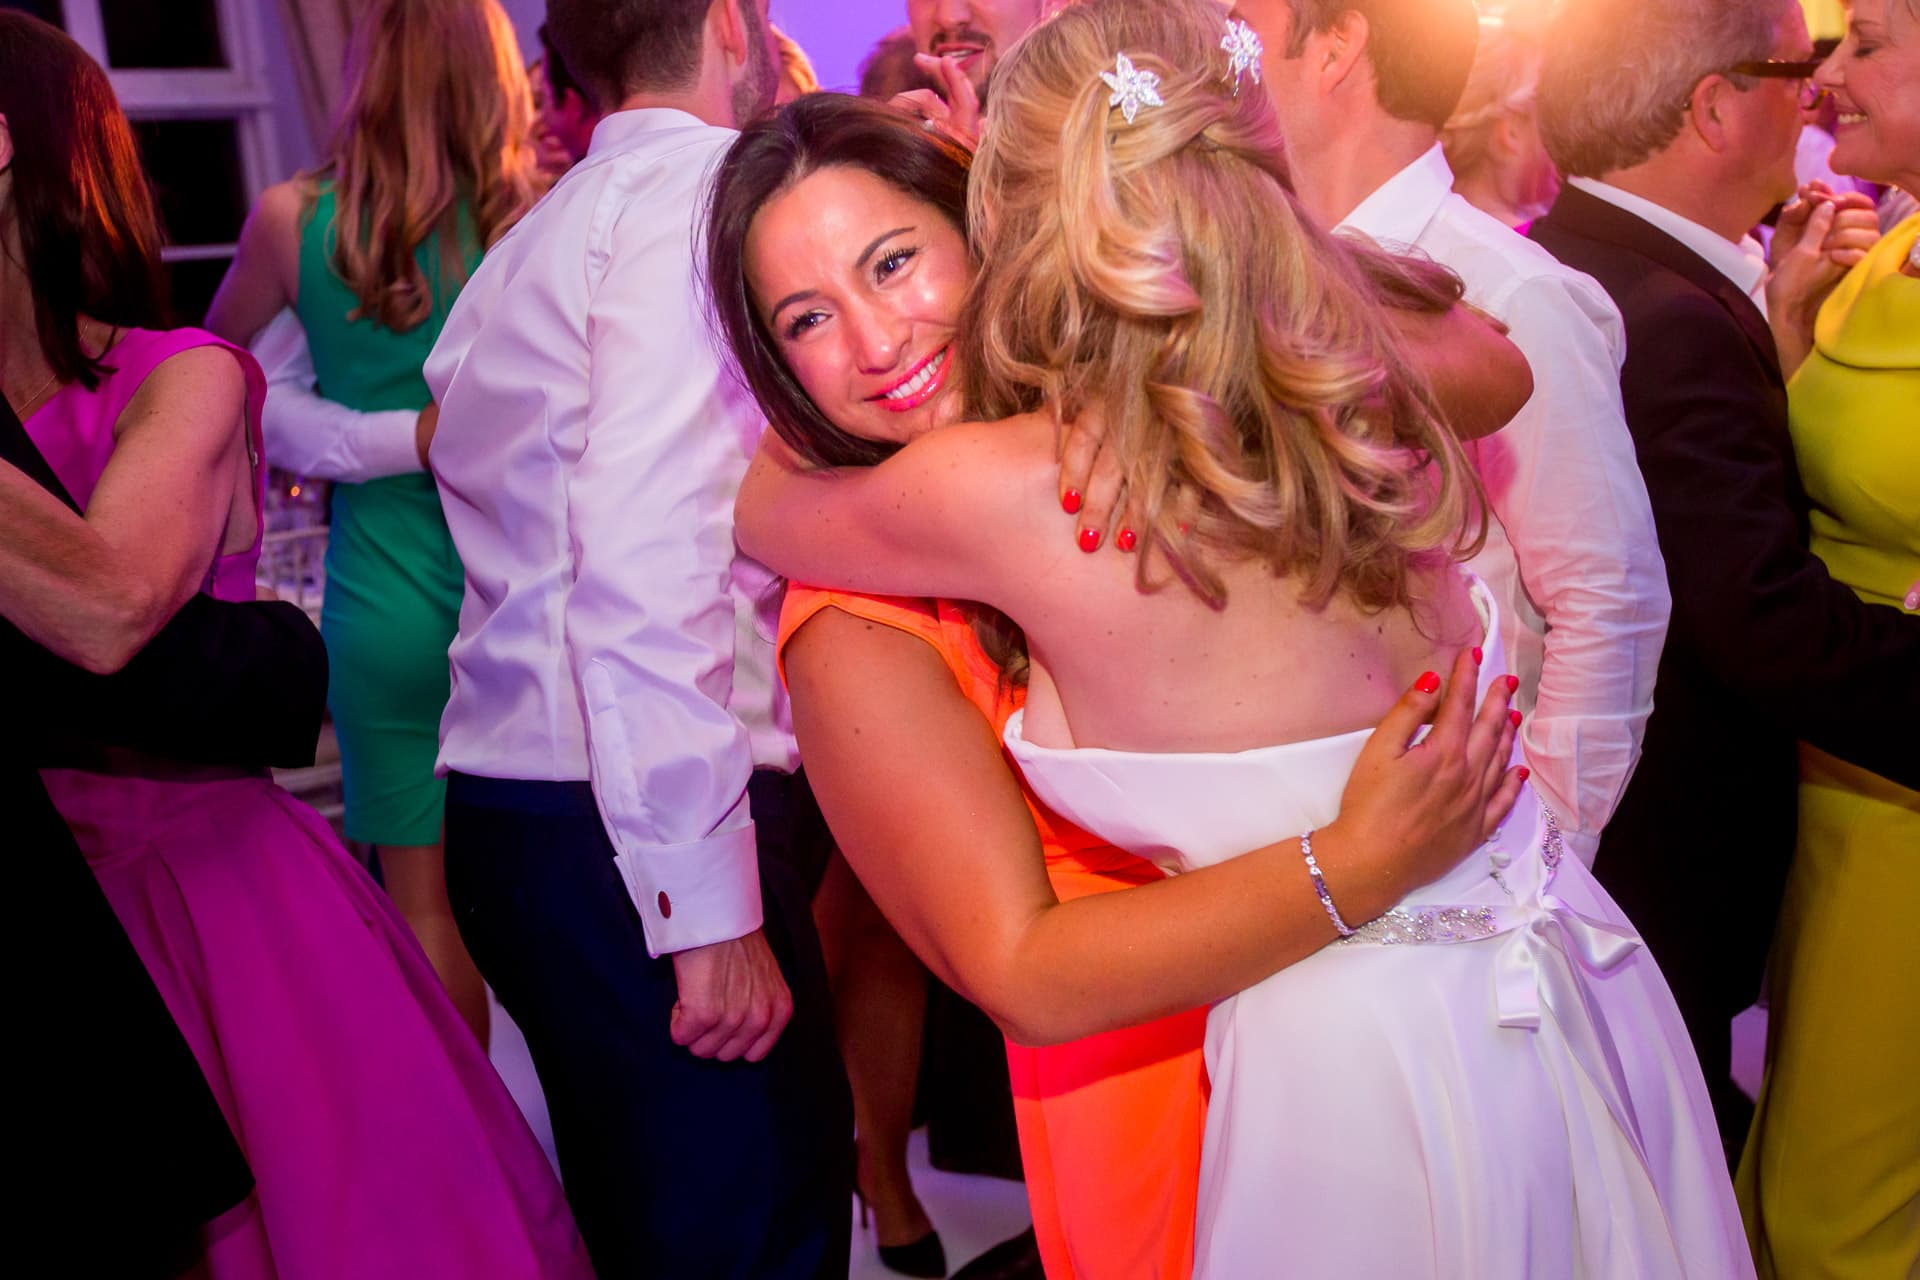 friend hugging the bride